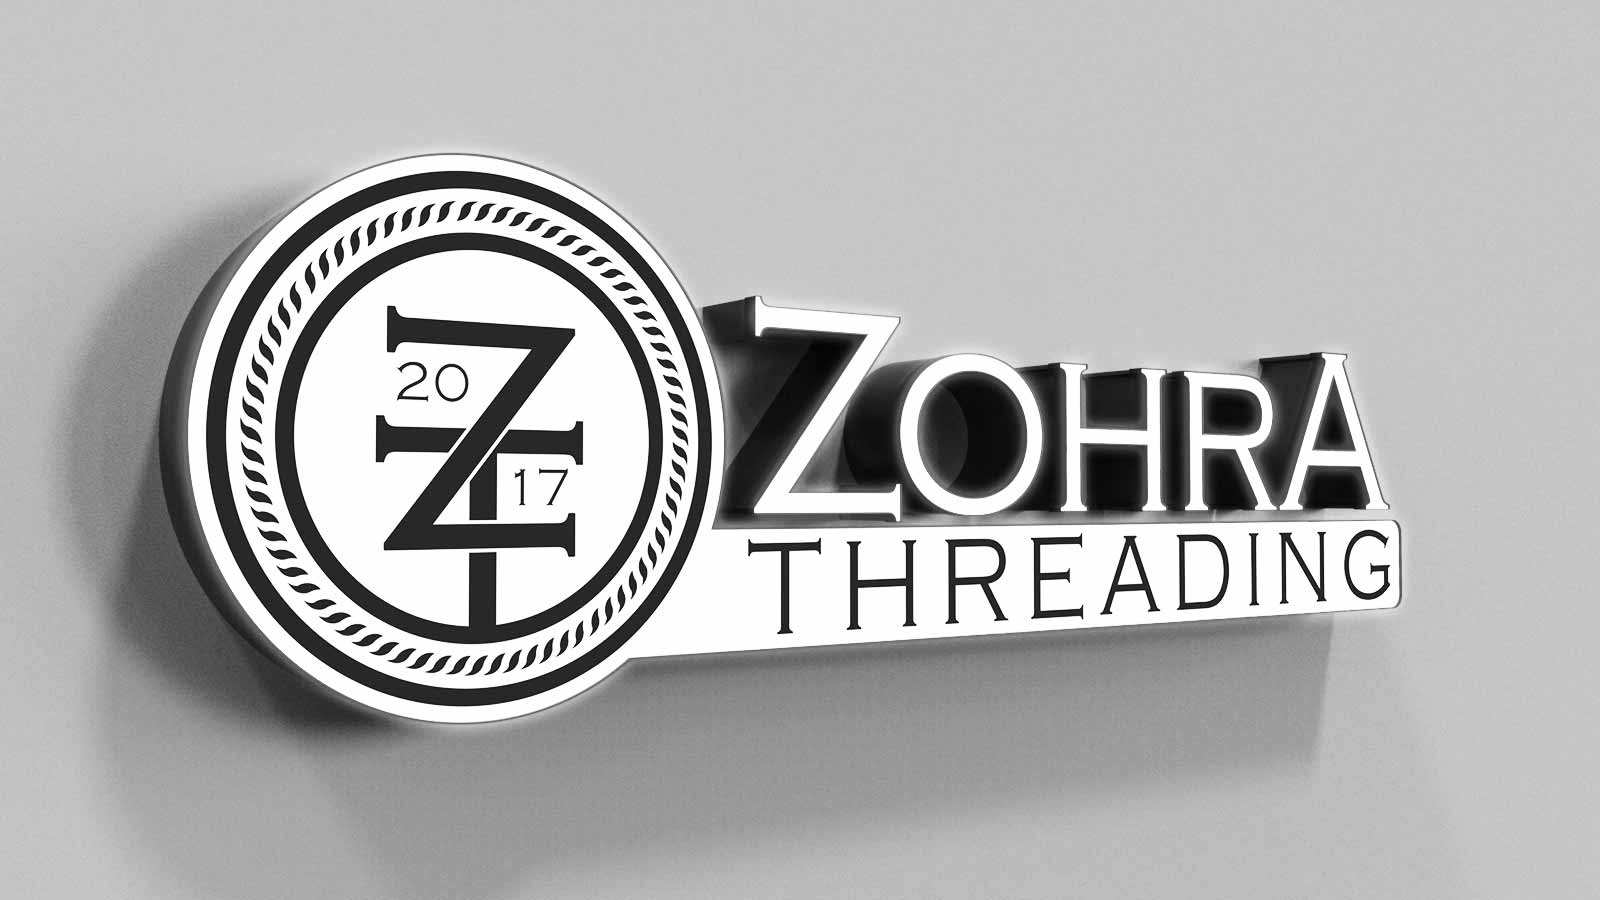 zohra threading light up sign rendering